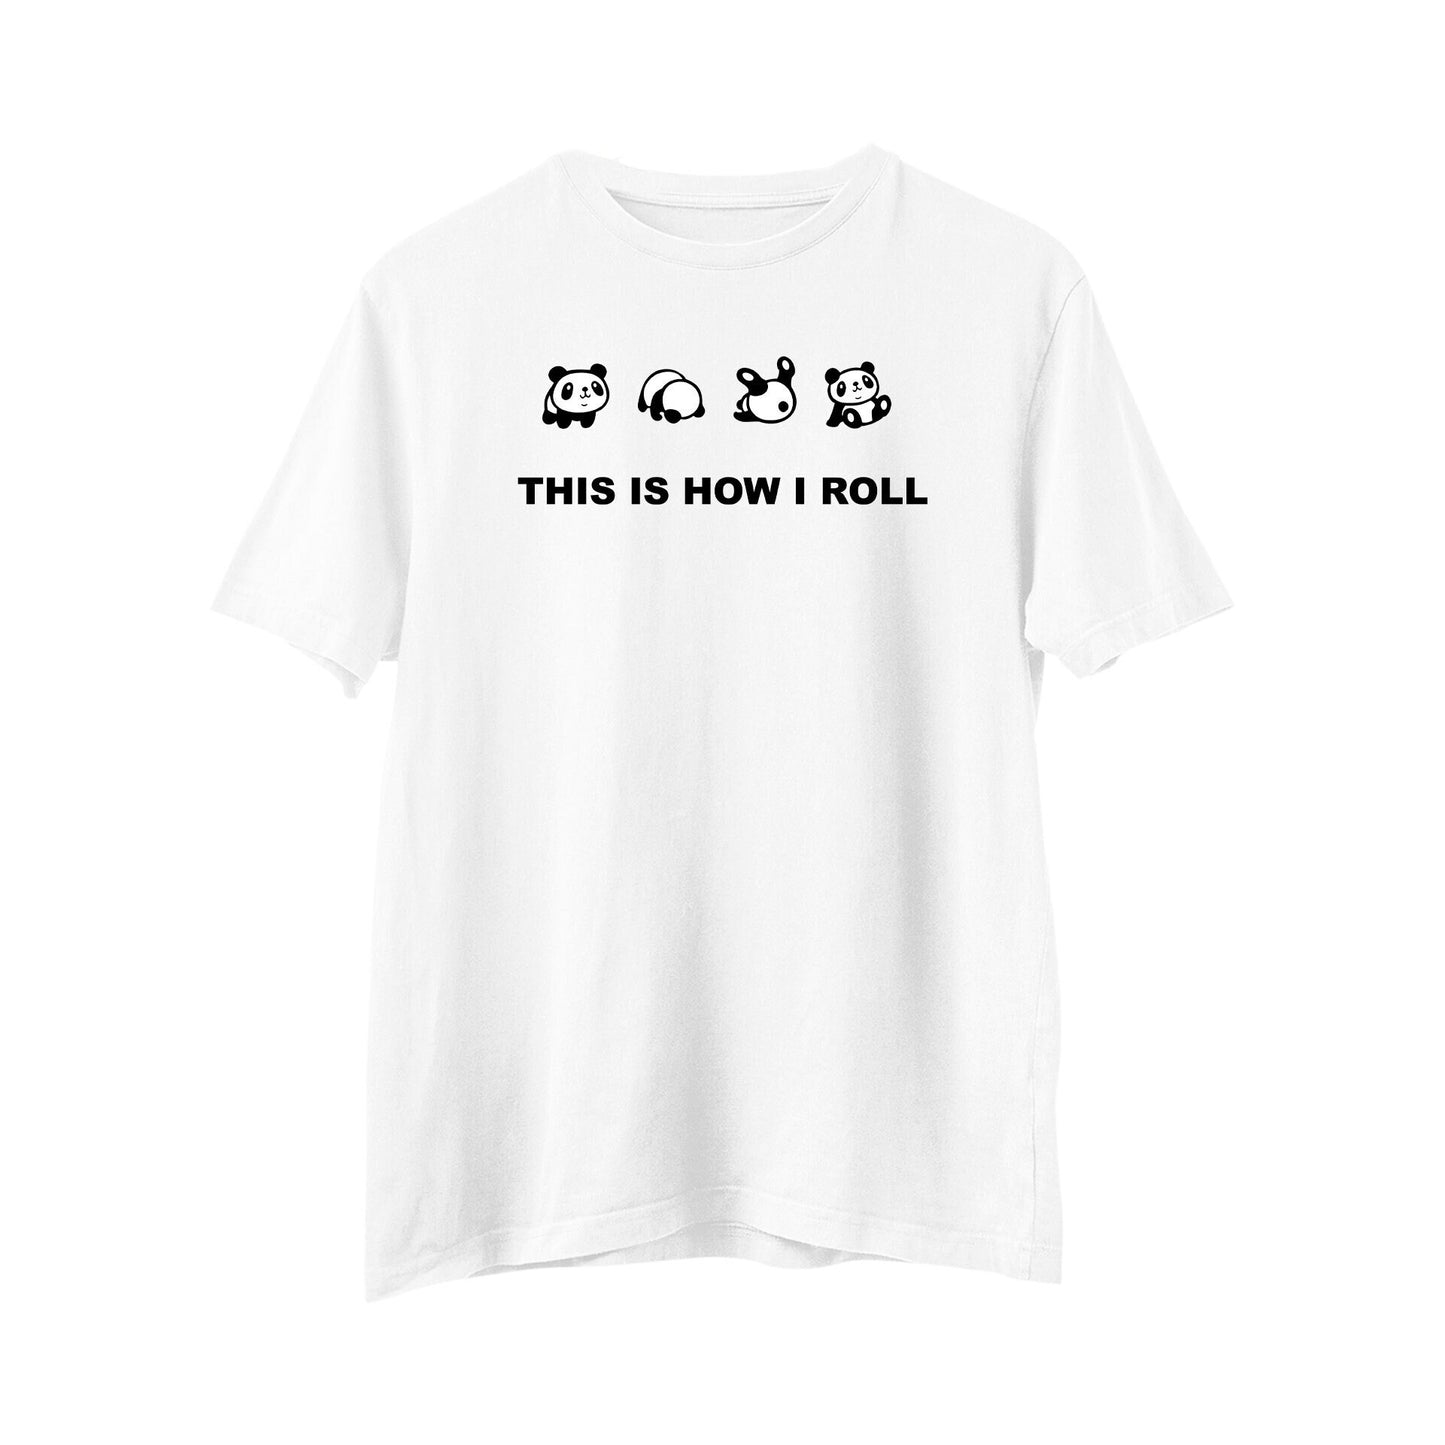 This is how I roll T-Shirt, Panda T-Shirt, Cute Animal T-Shirt, Cute Women's Shirt, Funny Japanese tshirt, Aesthetic T-Shirt, Kawaii